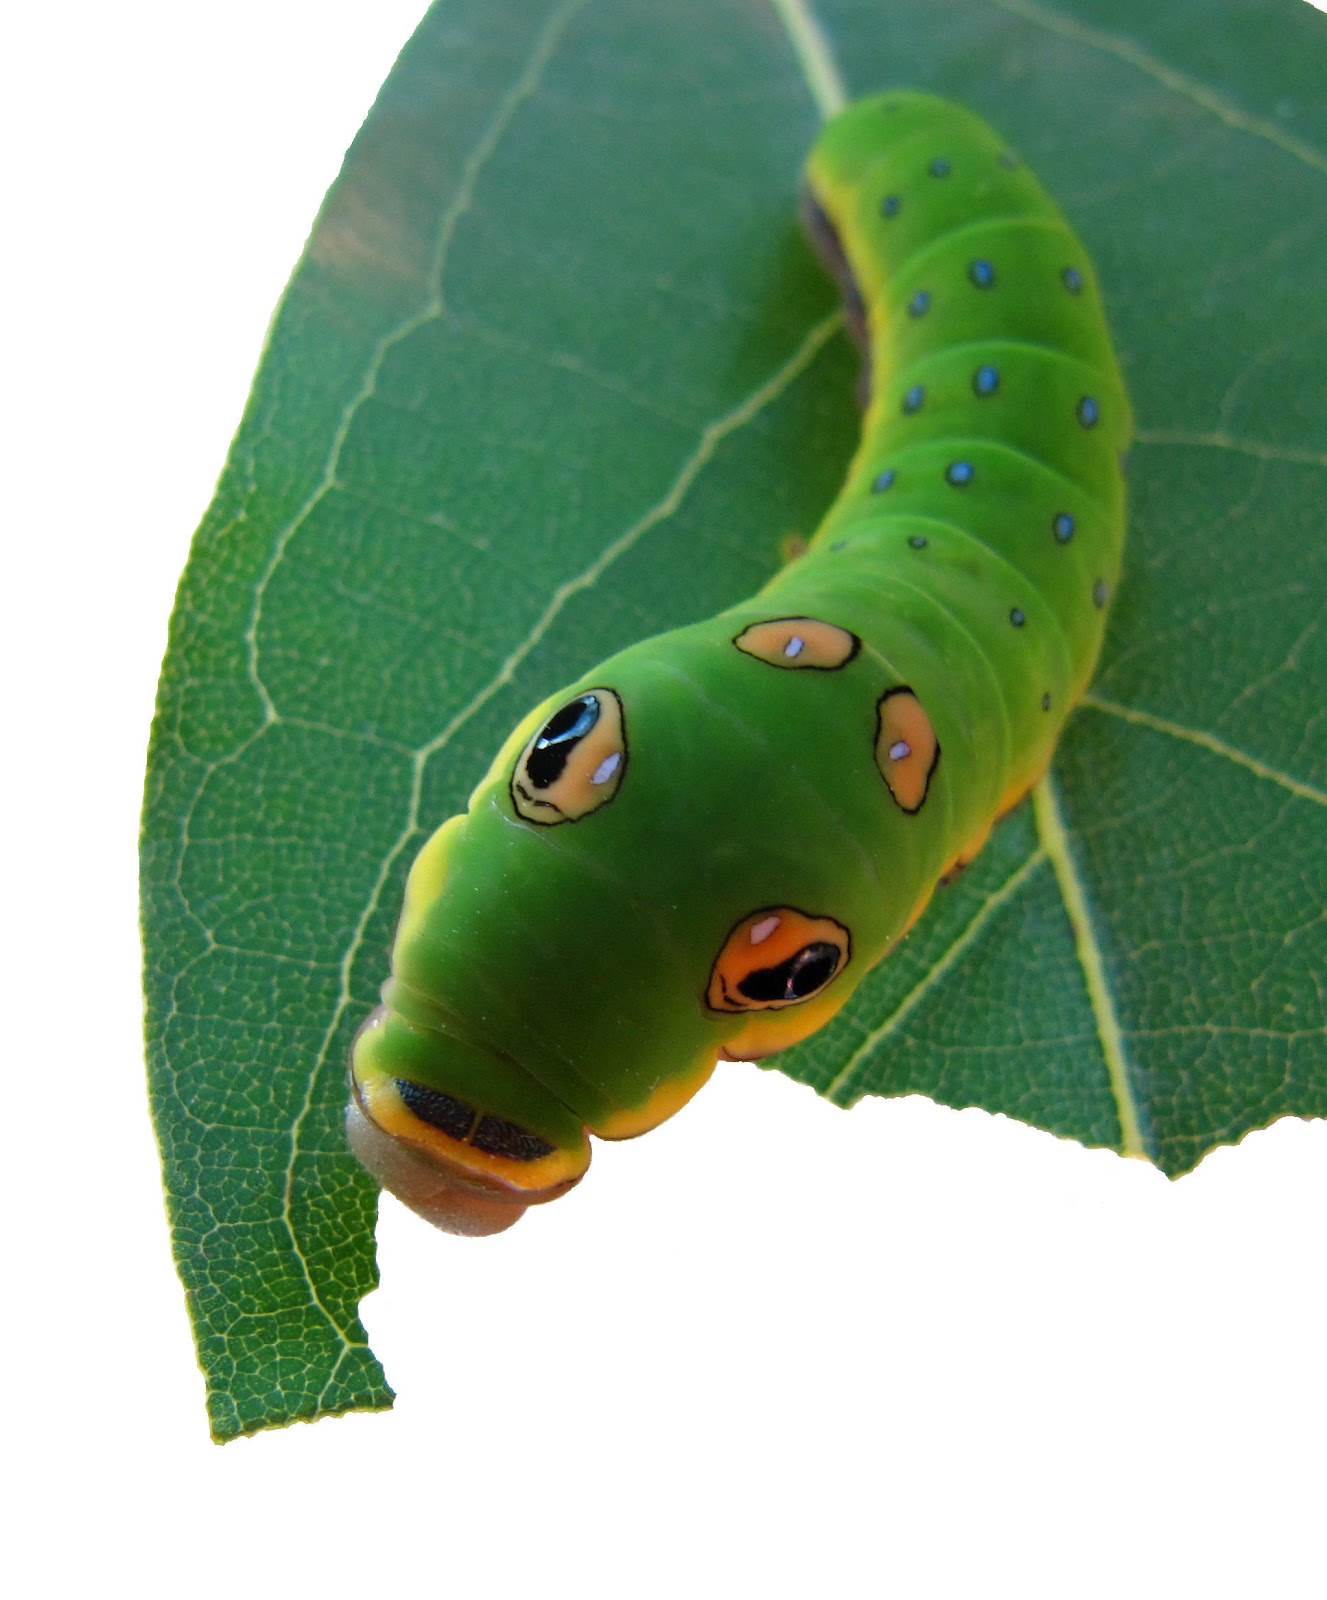 Amazing Caterpillars : Weird, Beautiful, Colorful Caterpillars | Most